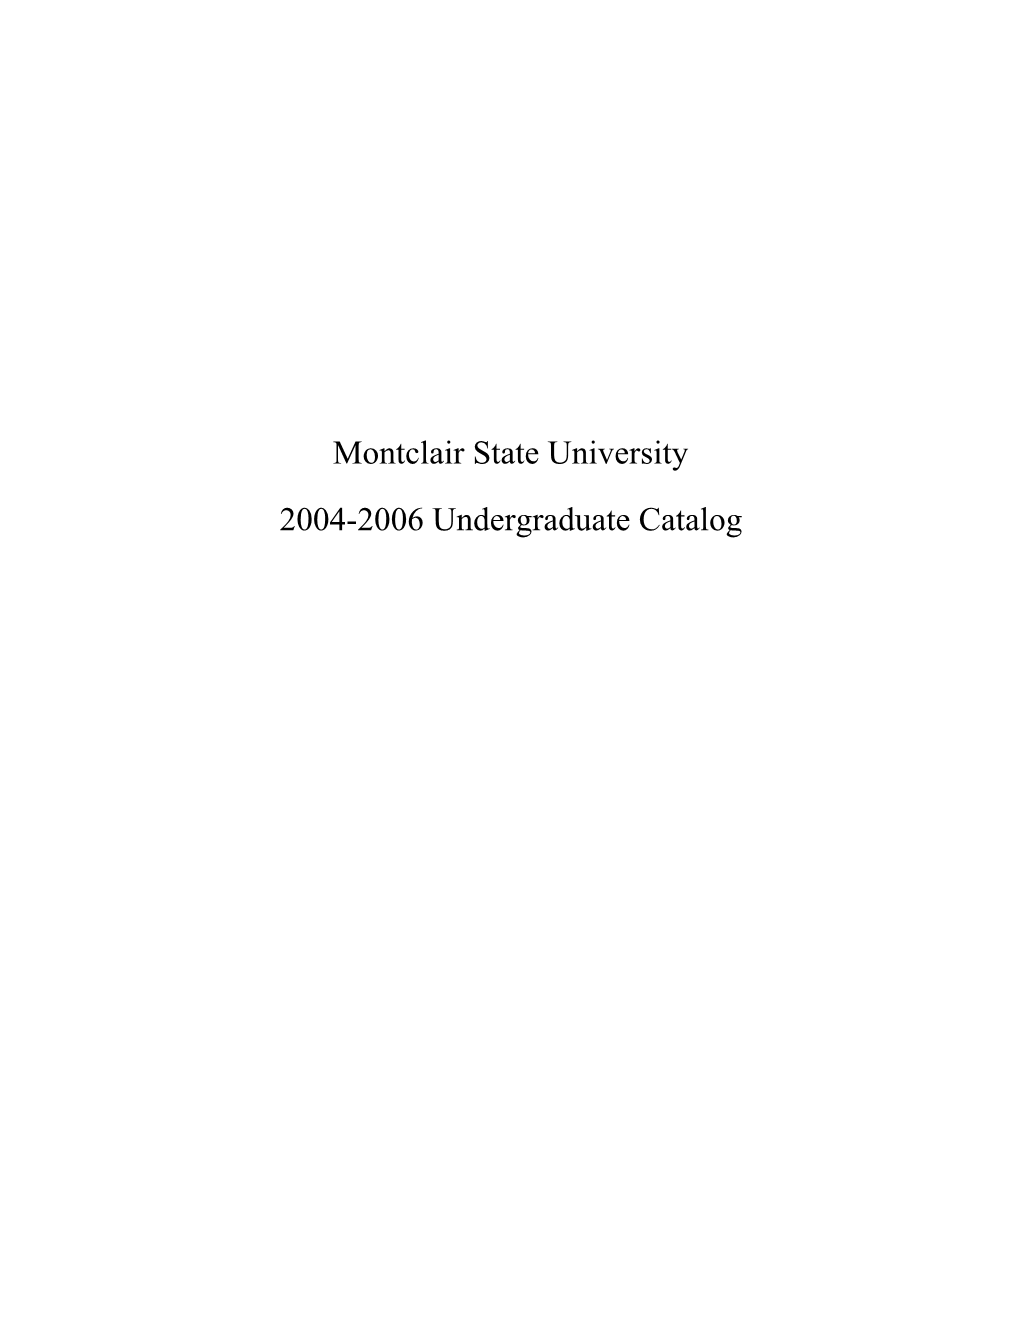 Montclair State University 2004-2006 Undergraduate Catalog Montclair State University at a Glance